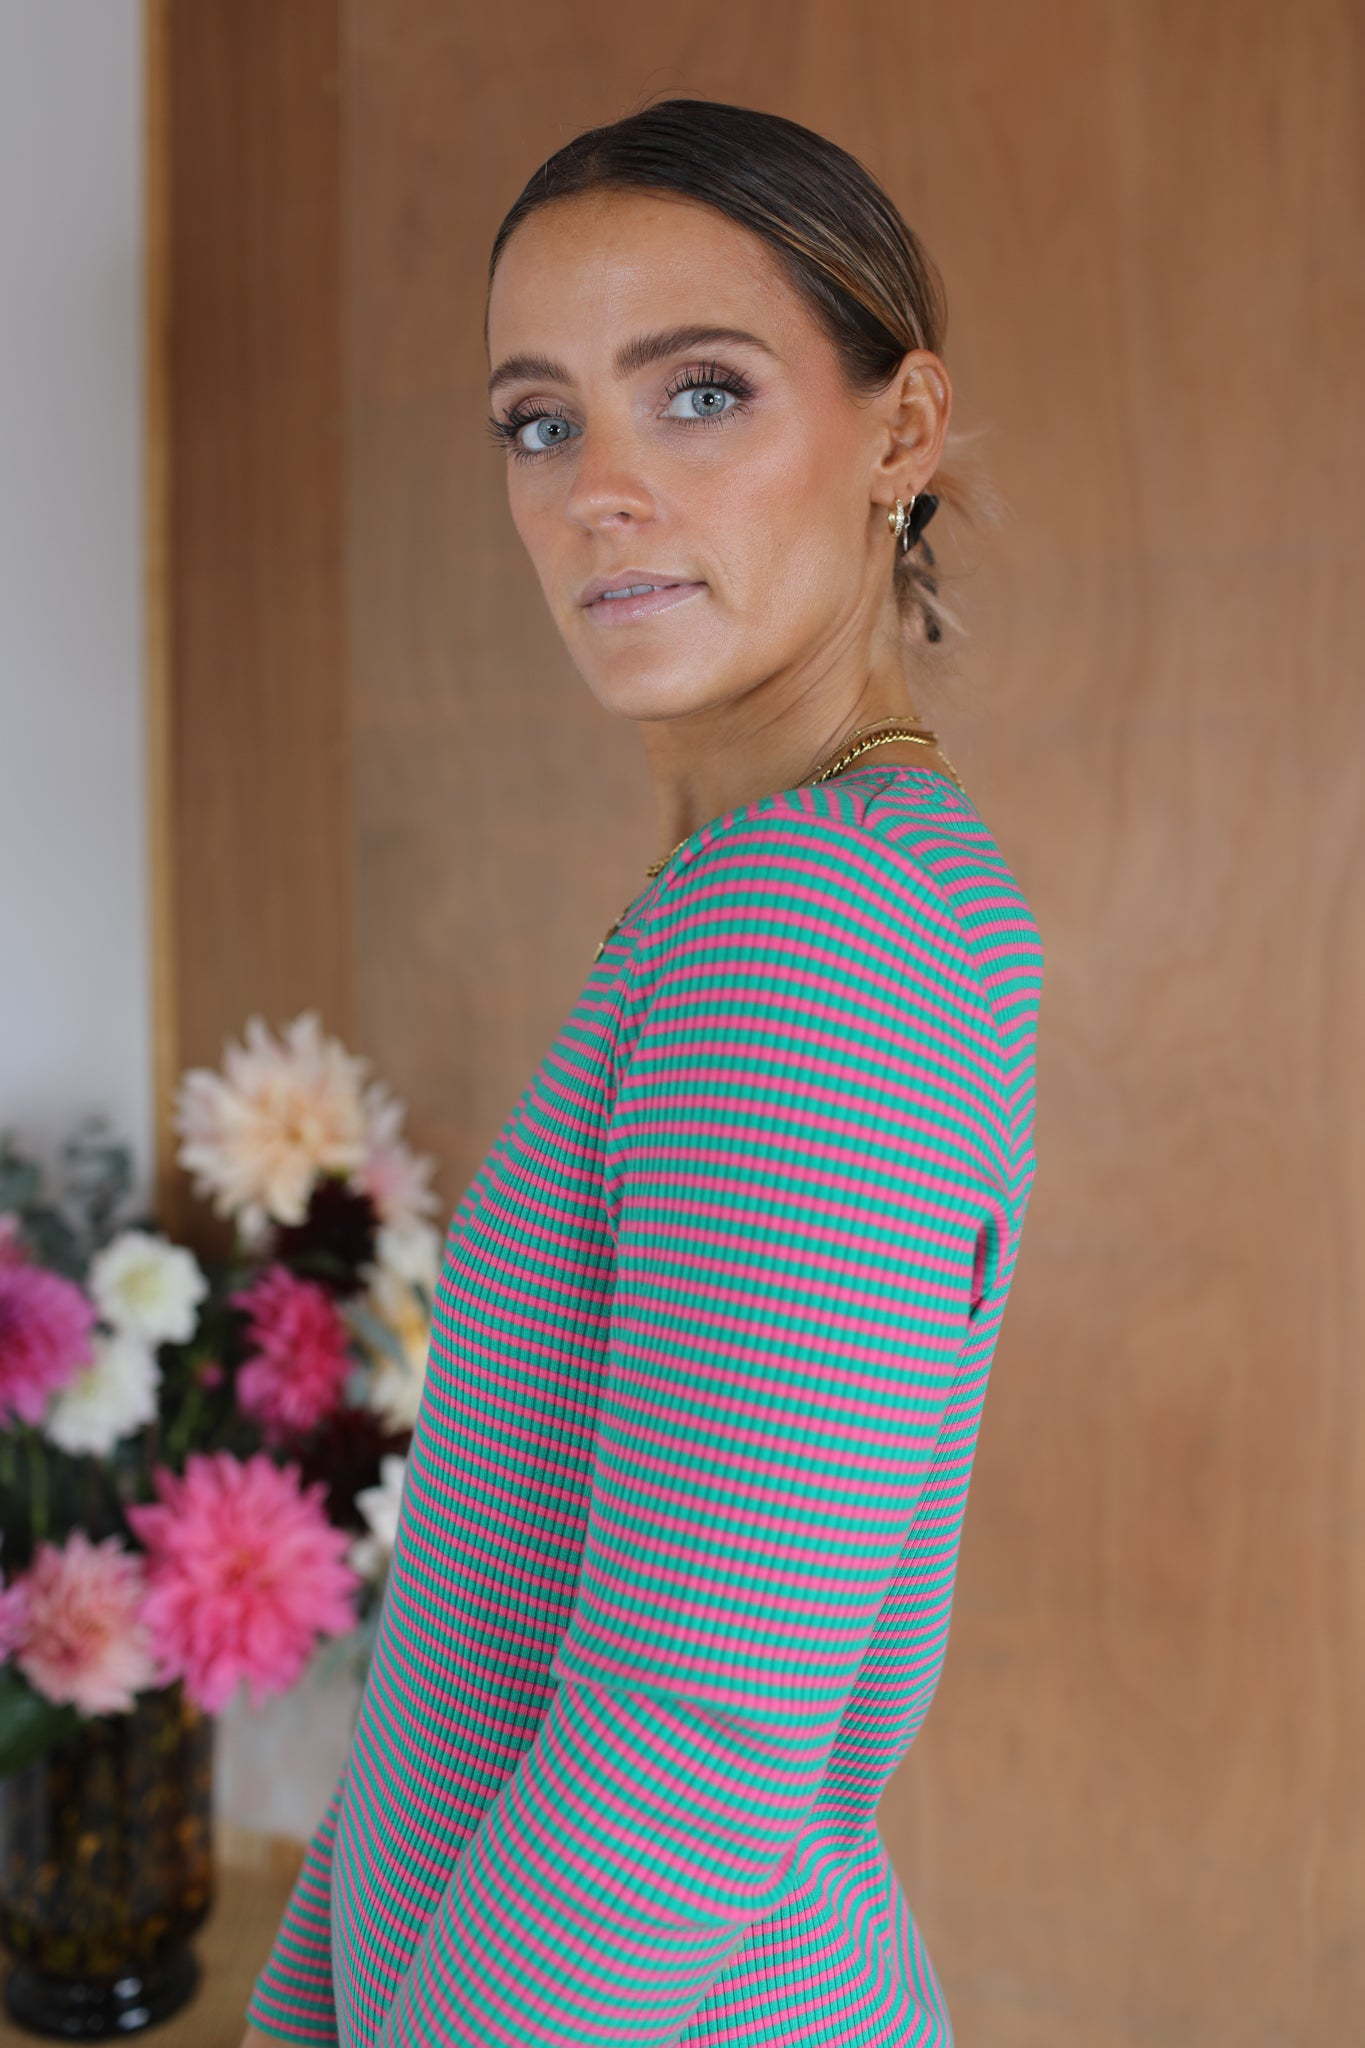 Lauren Dress - Pink/Green Stripe